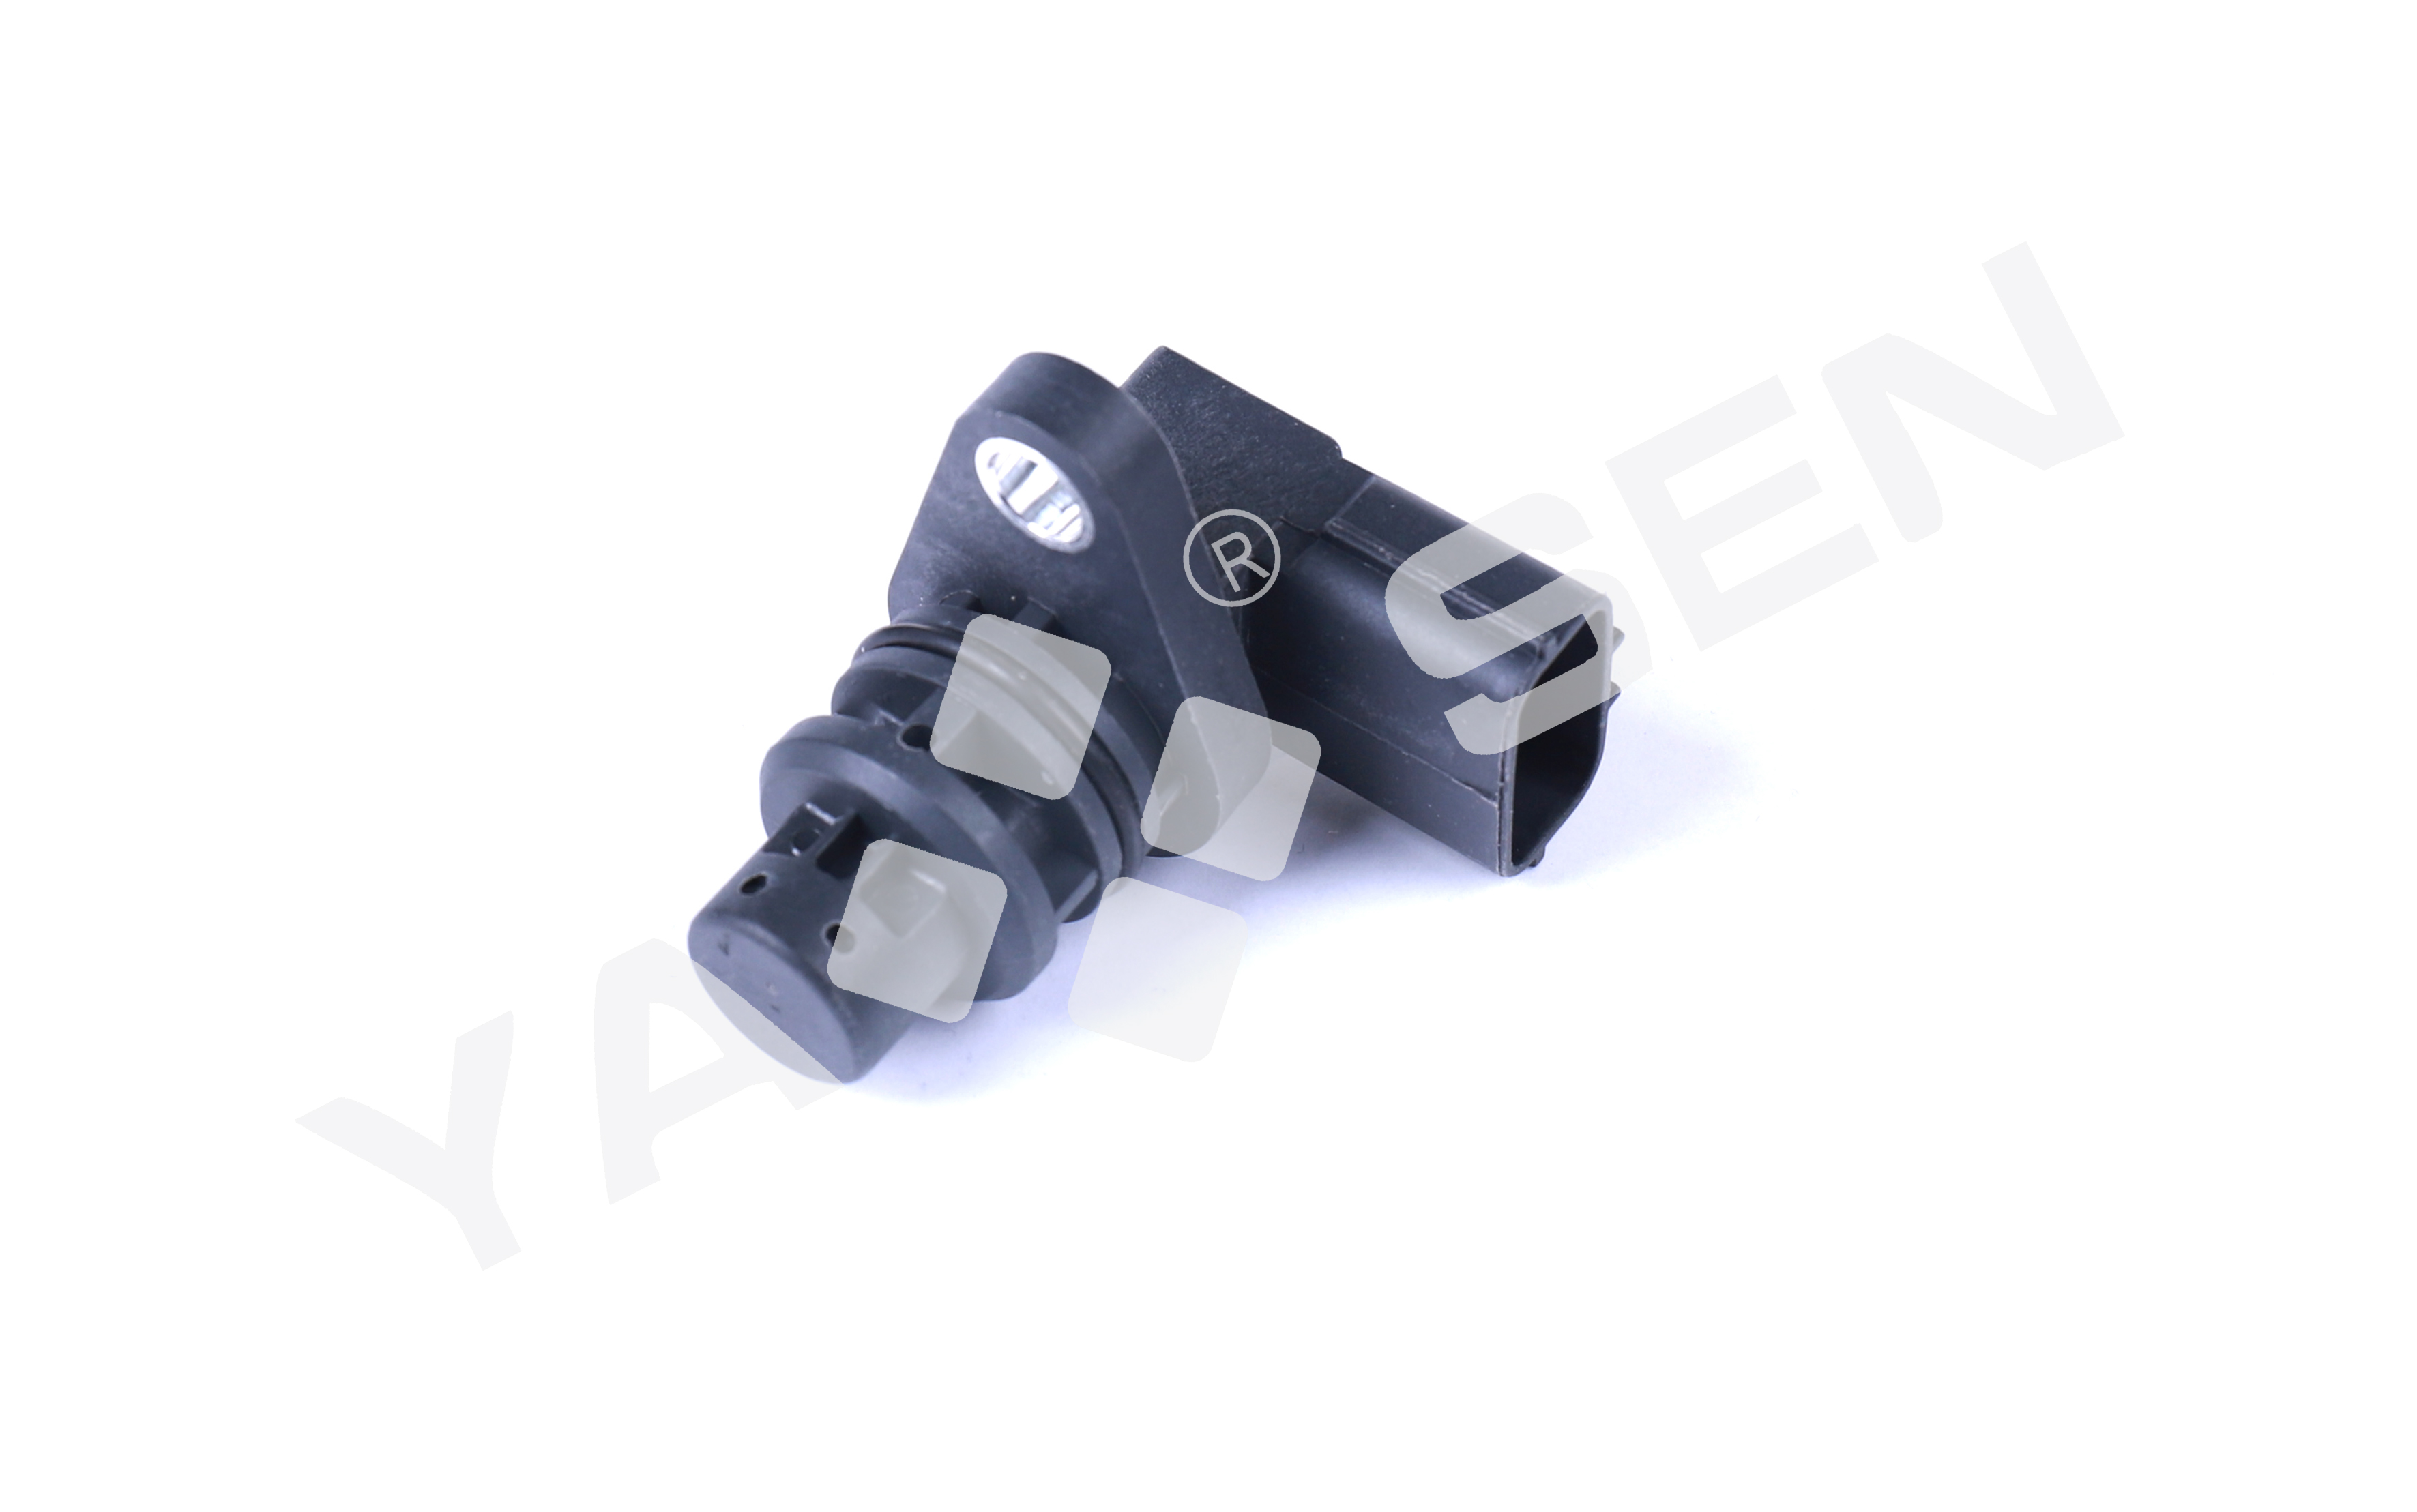 Hot-selling Camshaft Position Sensor - Auto SPEED sensor  for MAZDA, FN1221551A  FN1121551  FN1121551PT  SU6385  SU9767 5S8302  917649  SC154  5S4923 SN7139 – YASEN